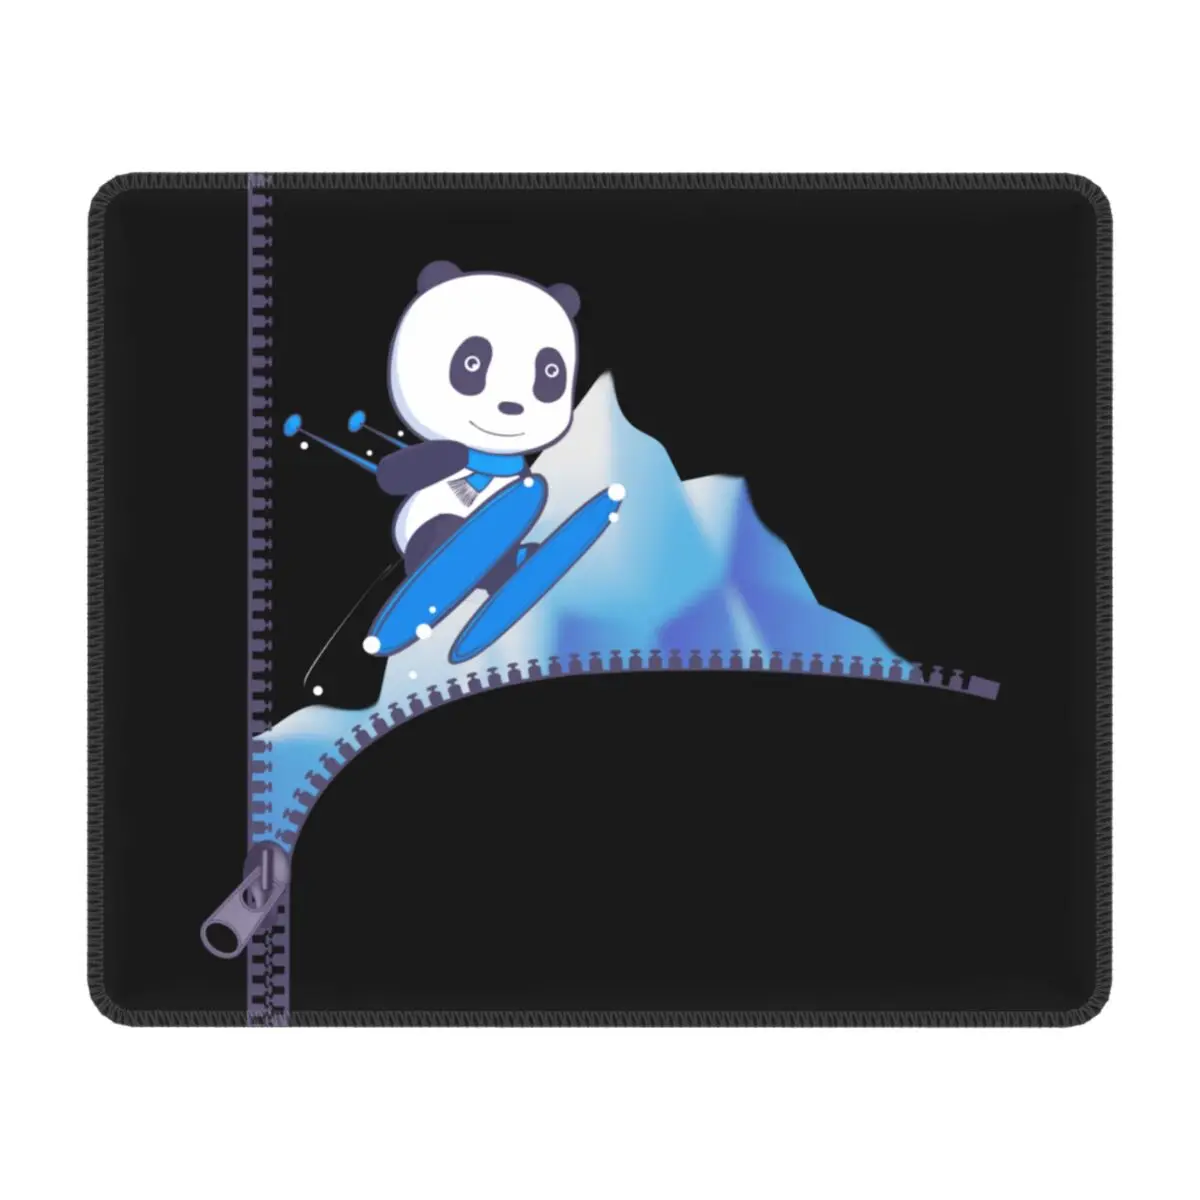 Giant Panda Skiing Mousepad Custom Design Gaming Mouse Pad Non Slip Rubber Base Office Desktop Ski Zipper Winter Mat